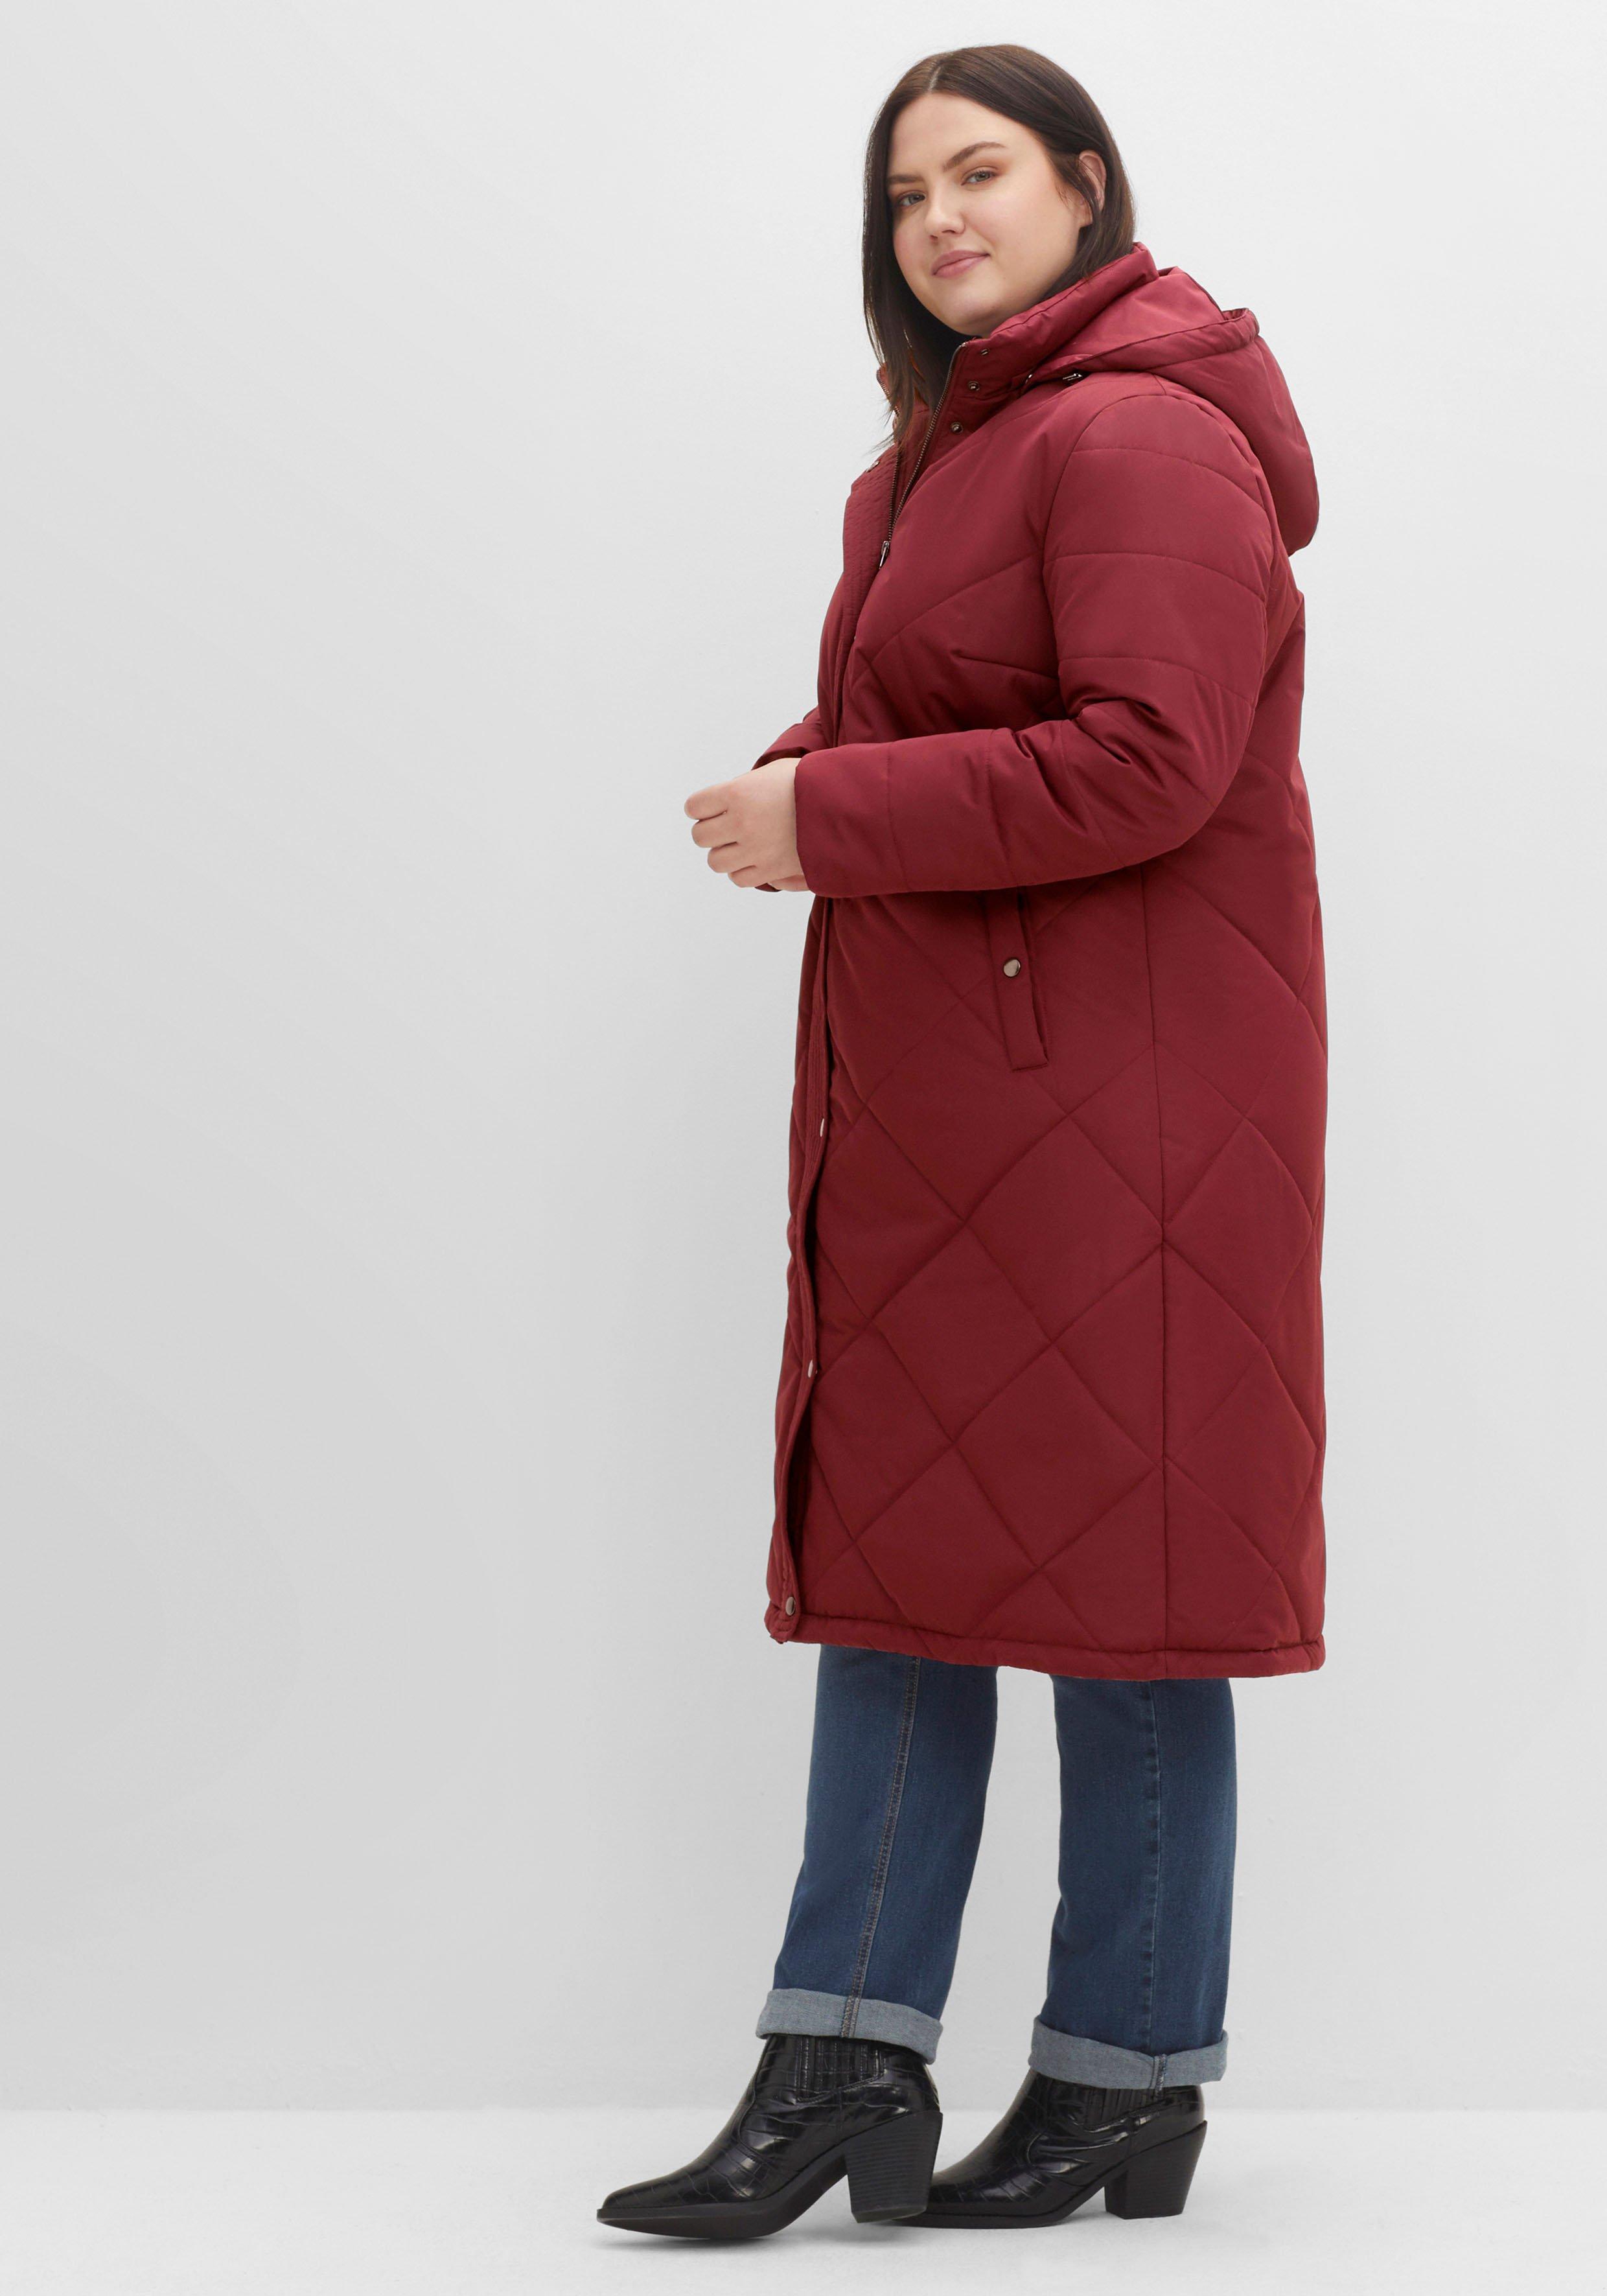 Damen Jacken & Mäntel große Größen rot | sheego ♥ Plus Size Mode | Parkas